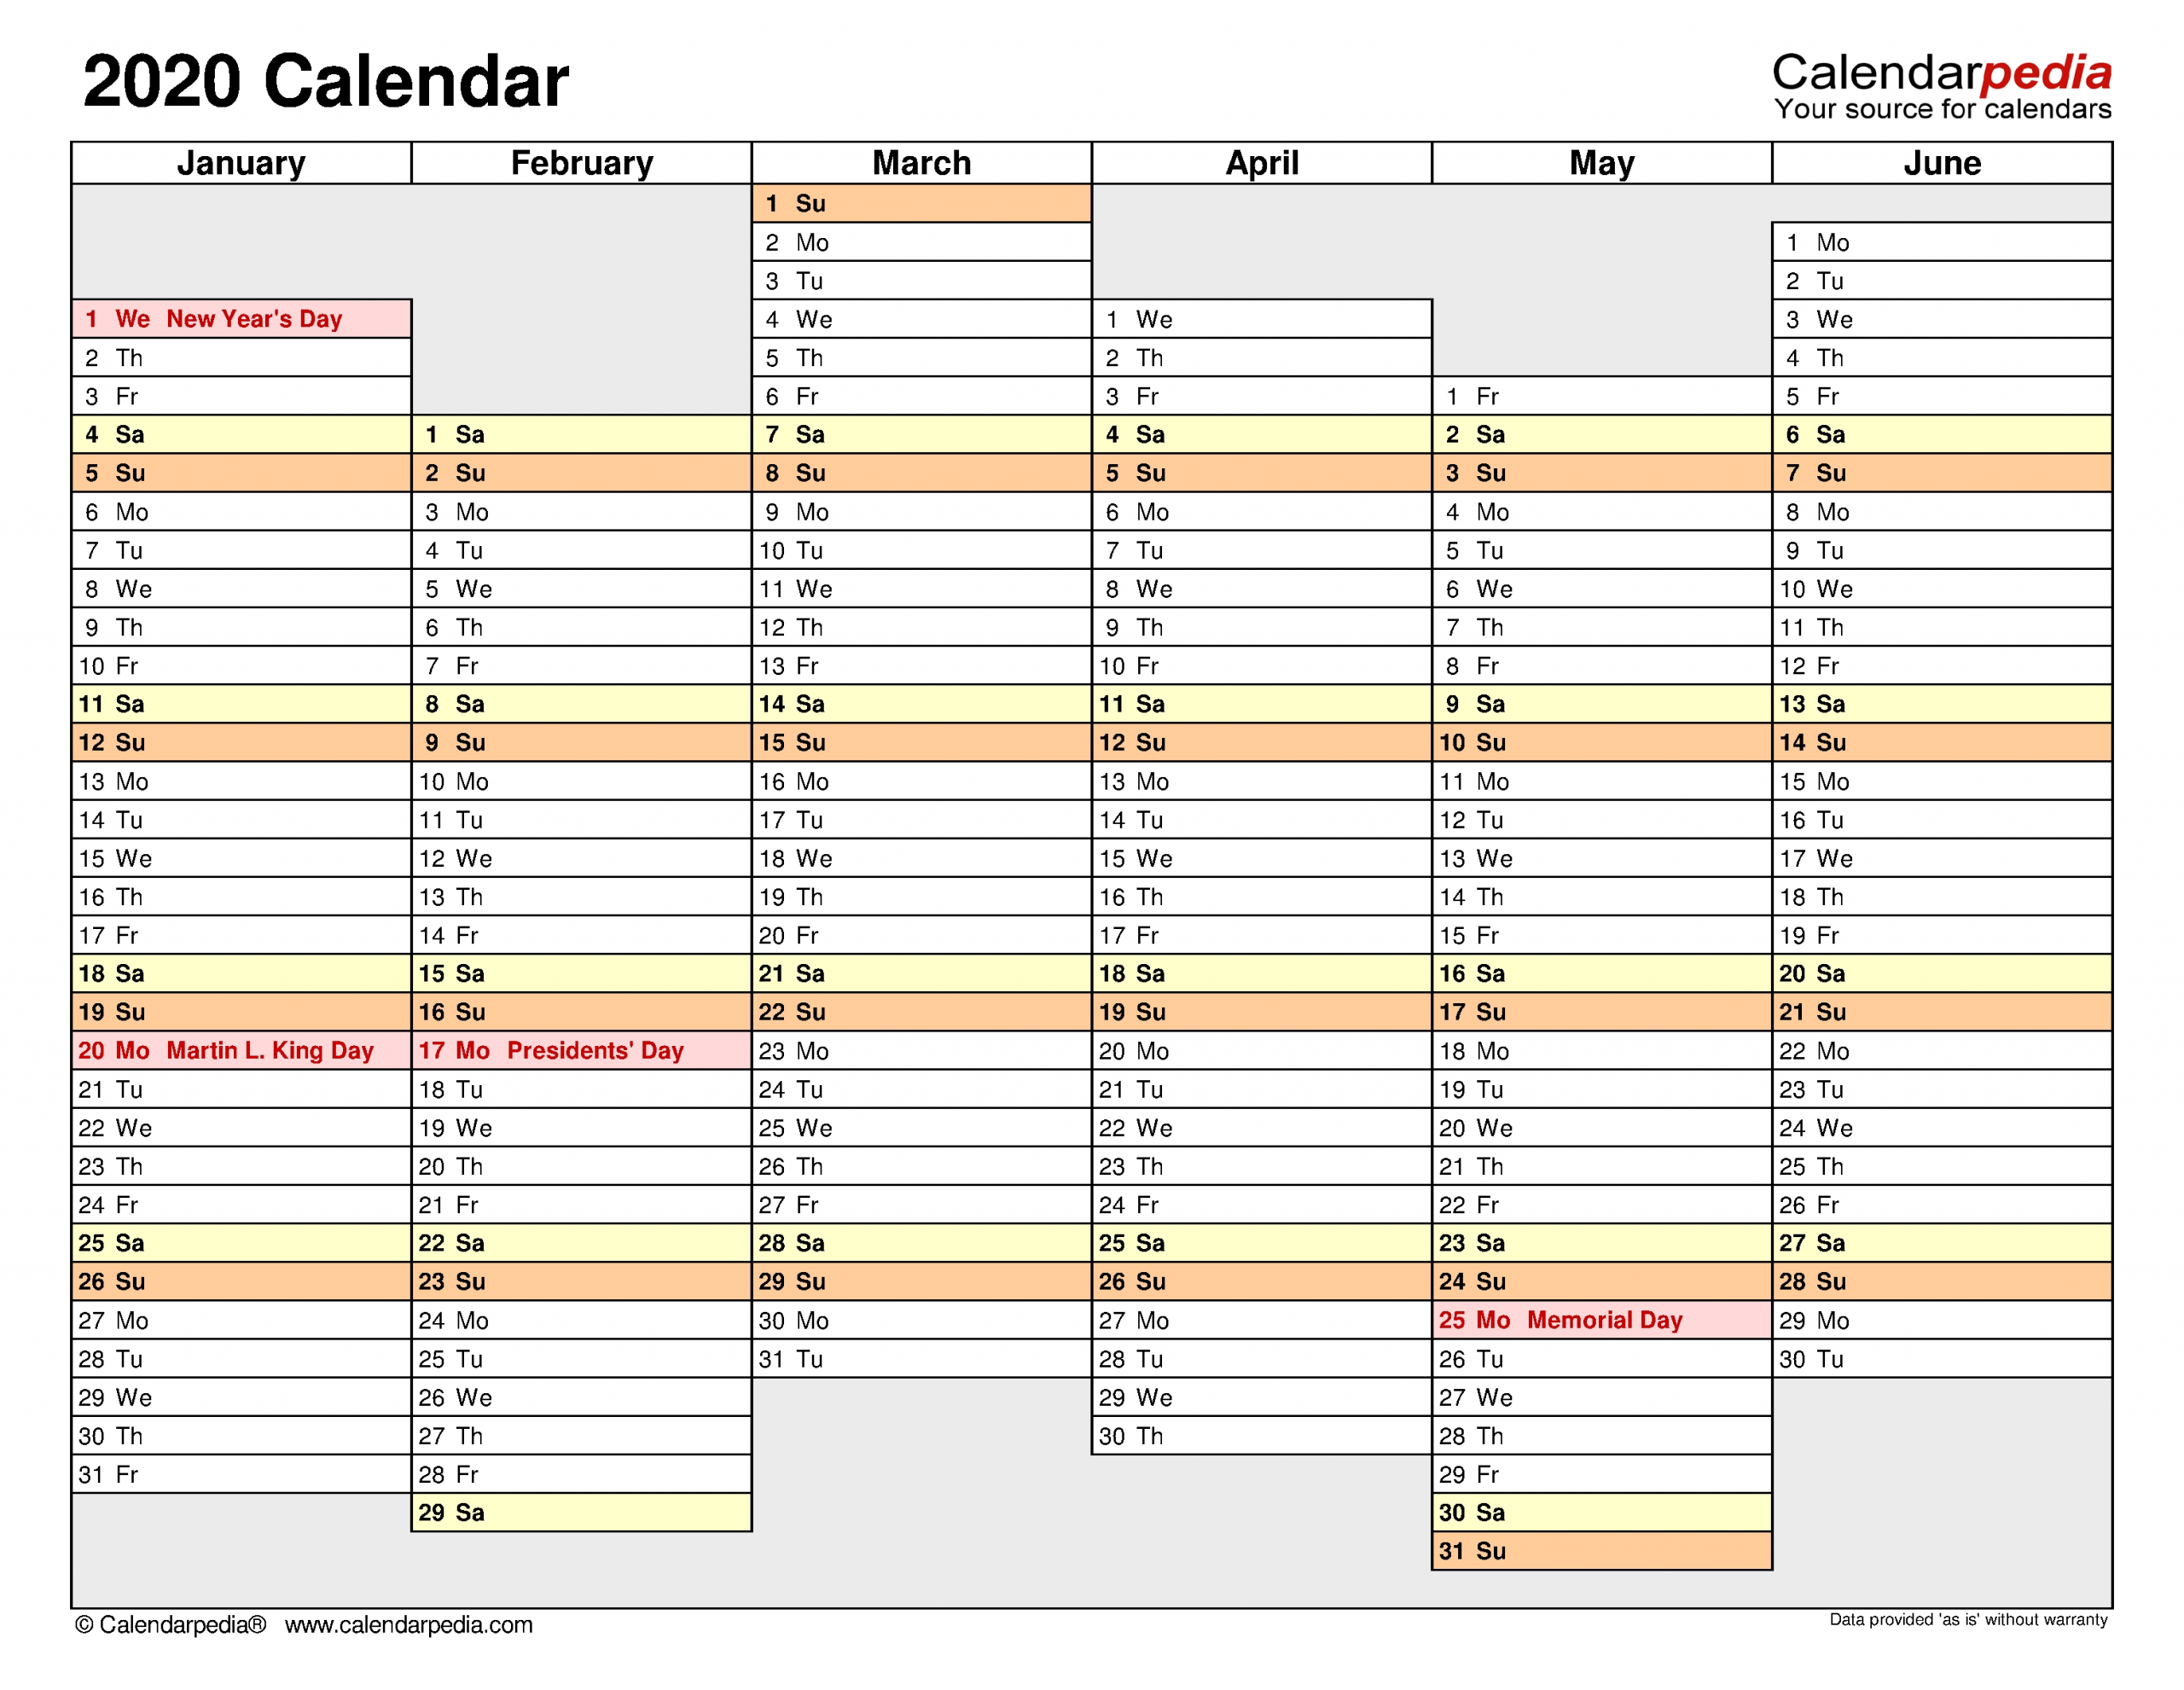 2020 Calendar - Free Printable Word Templates - Calendarpedia  6 Month Calendar Template Word